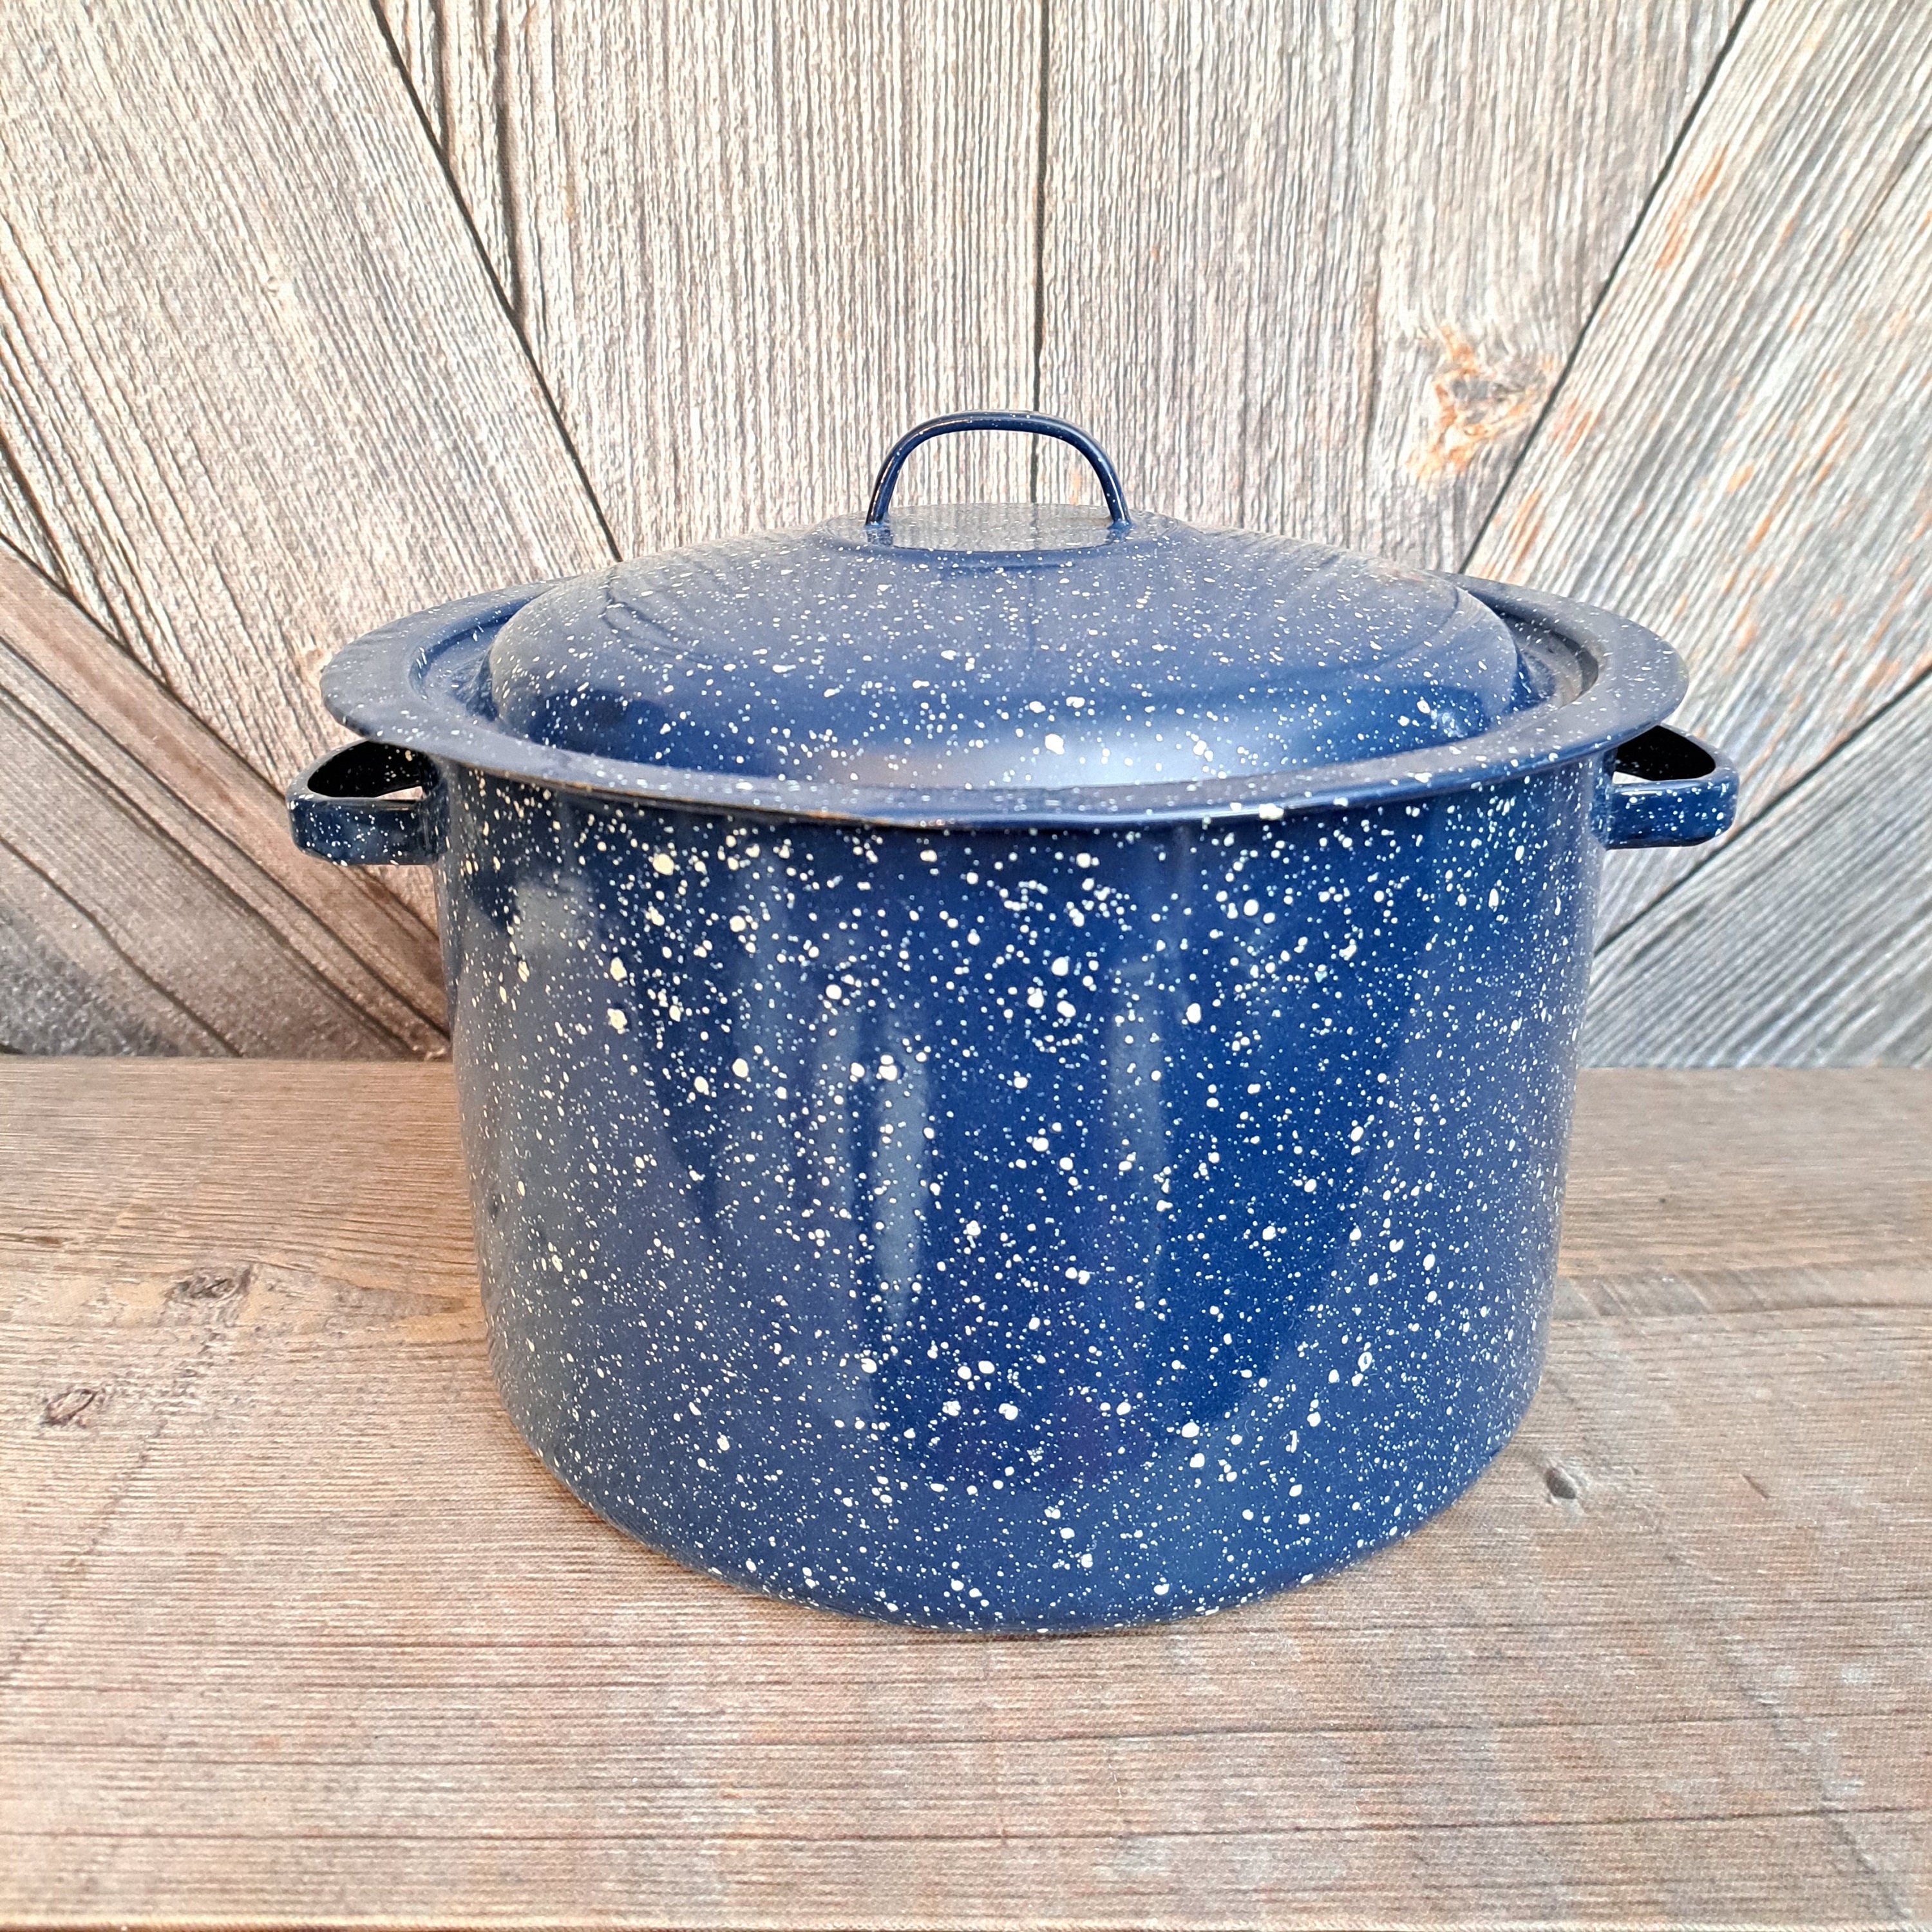 IMUSA 21 Quart Enamel Steamer Pot Blue with Steaming Rack